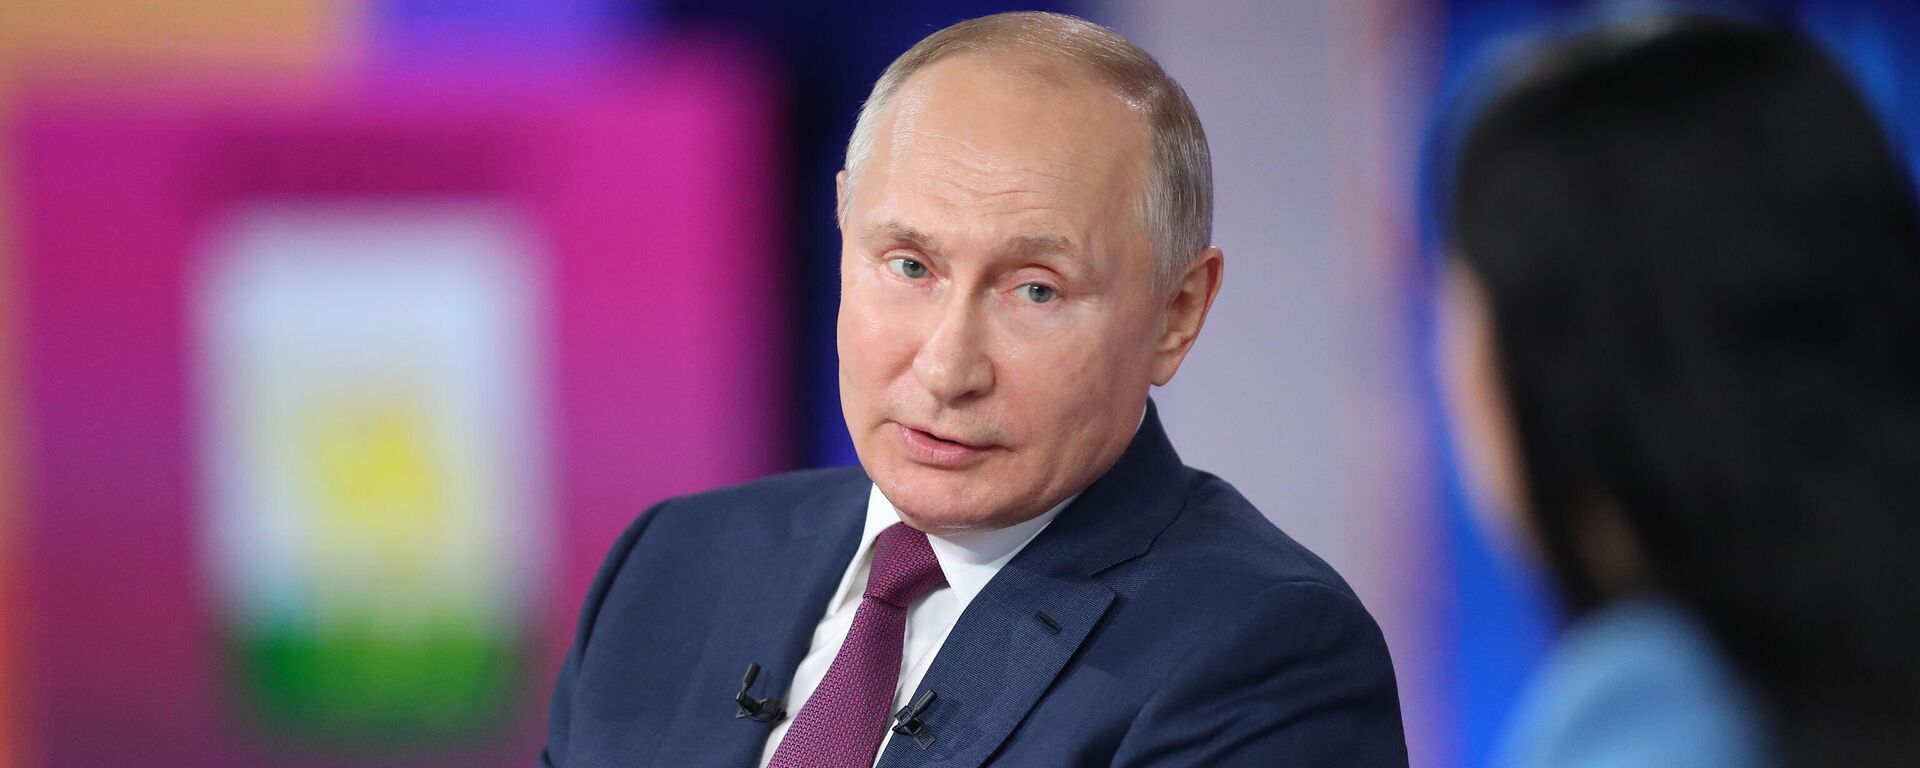 Vladímir Putin, presidente de Rusia - Sputnik Mundo, 1920, 22.08.2021